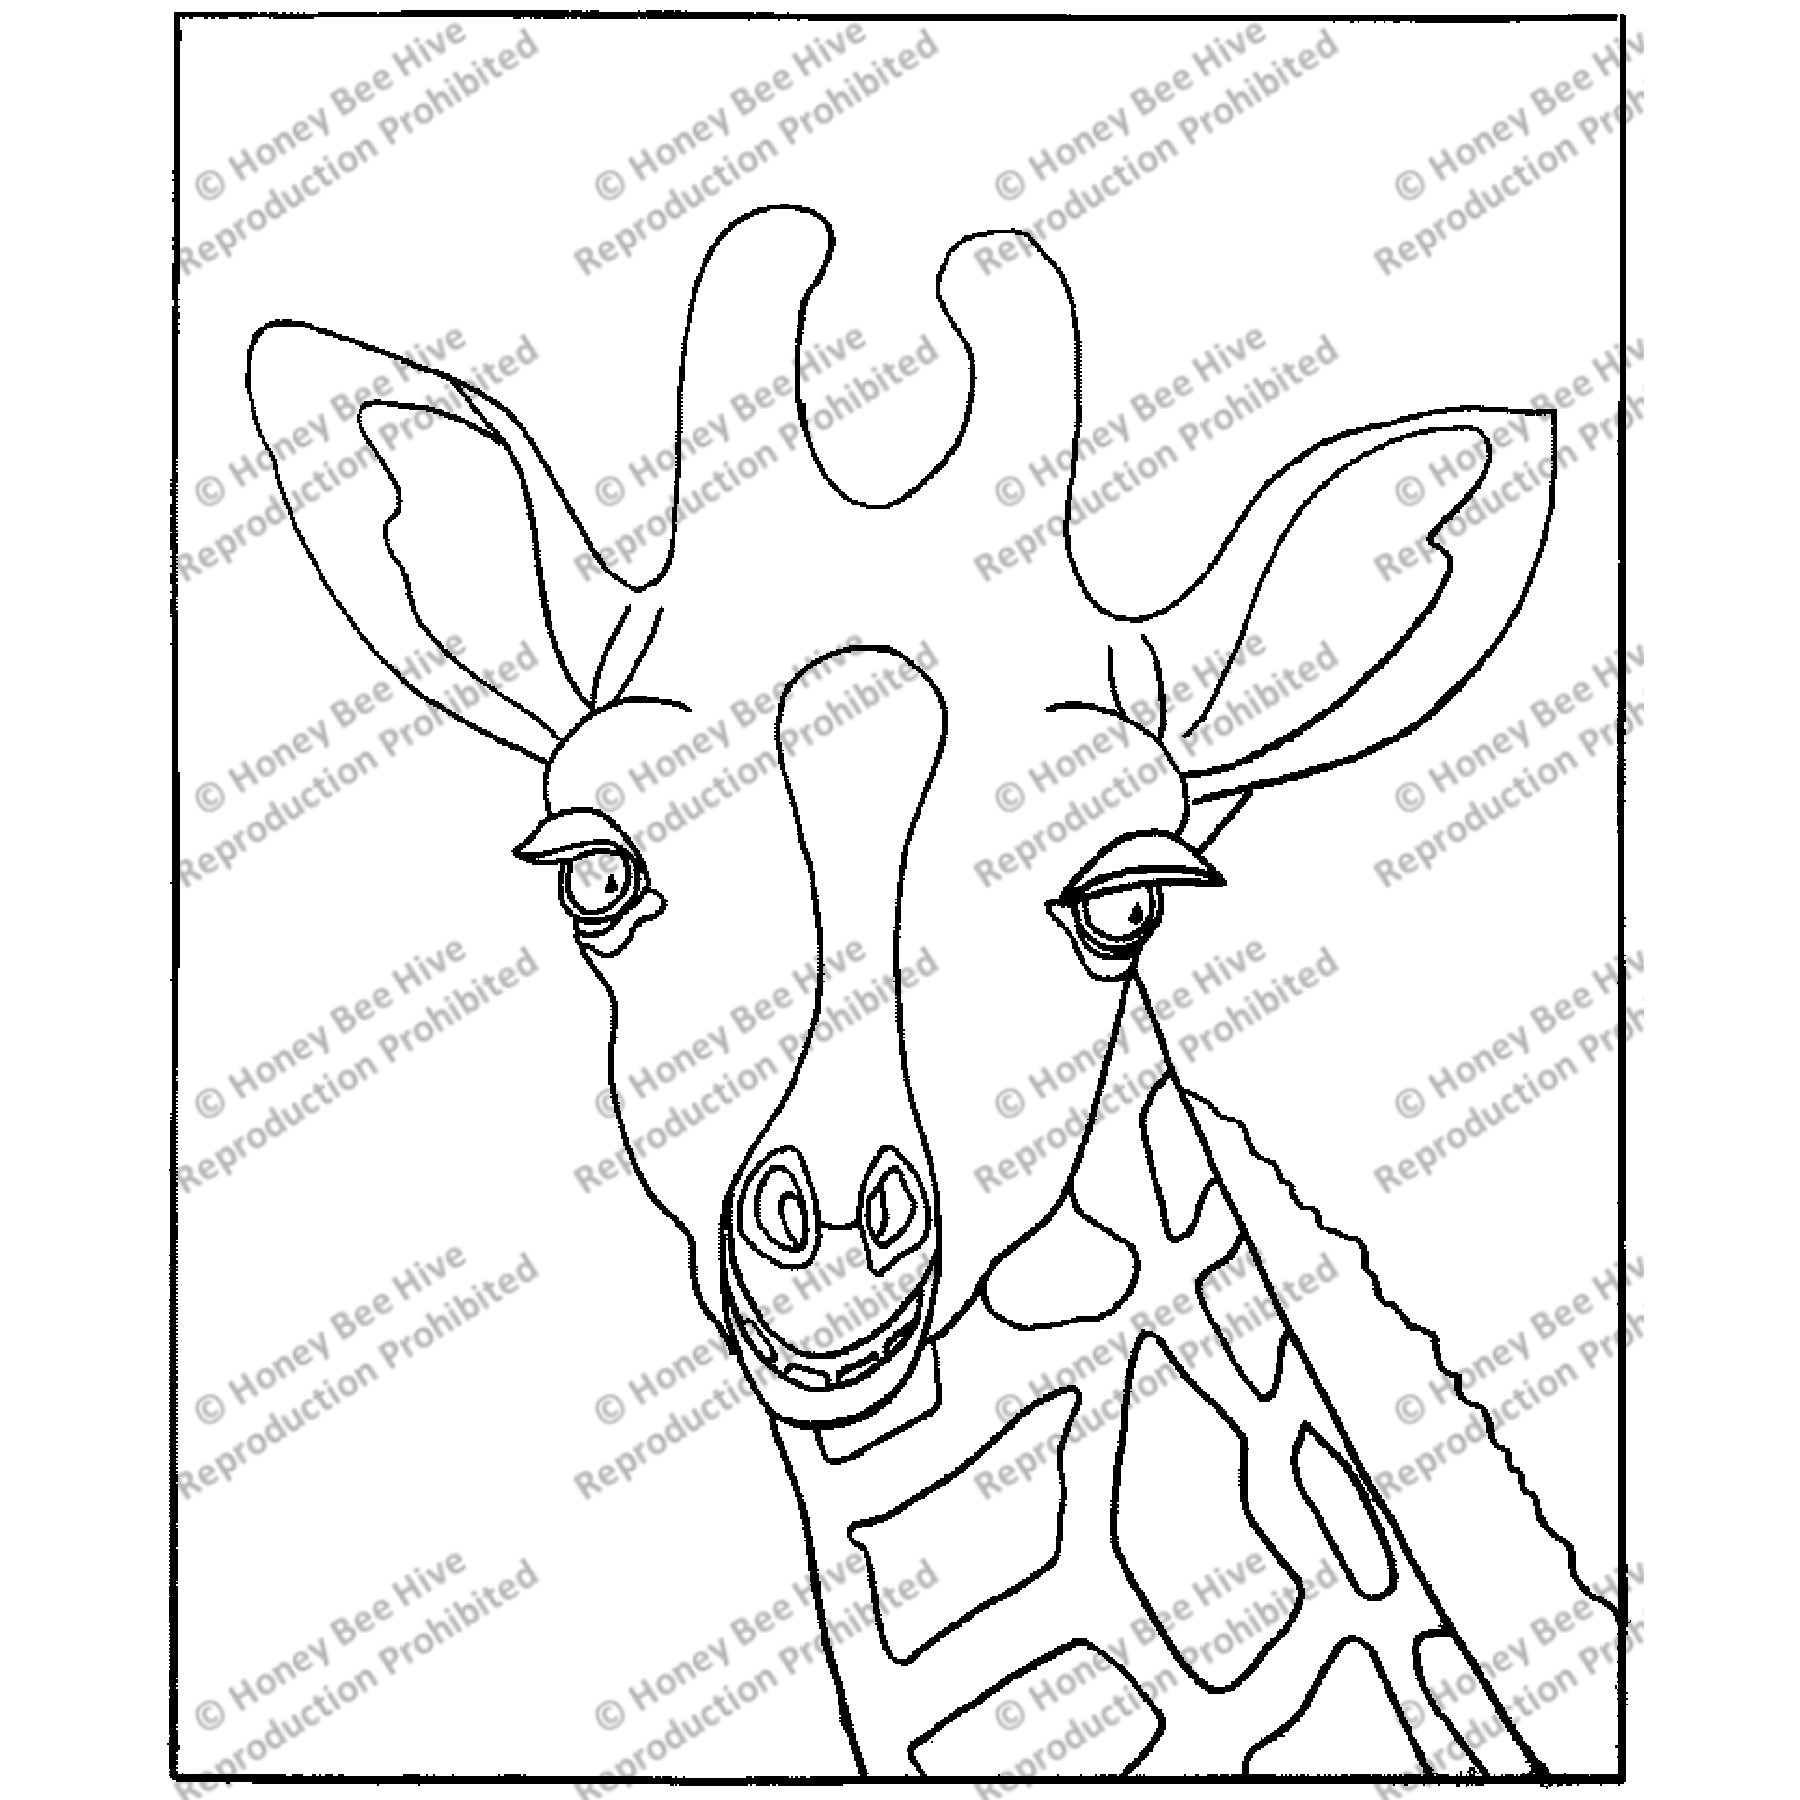 Giraffe, rug hooking pattern